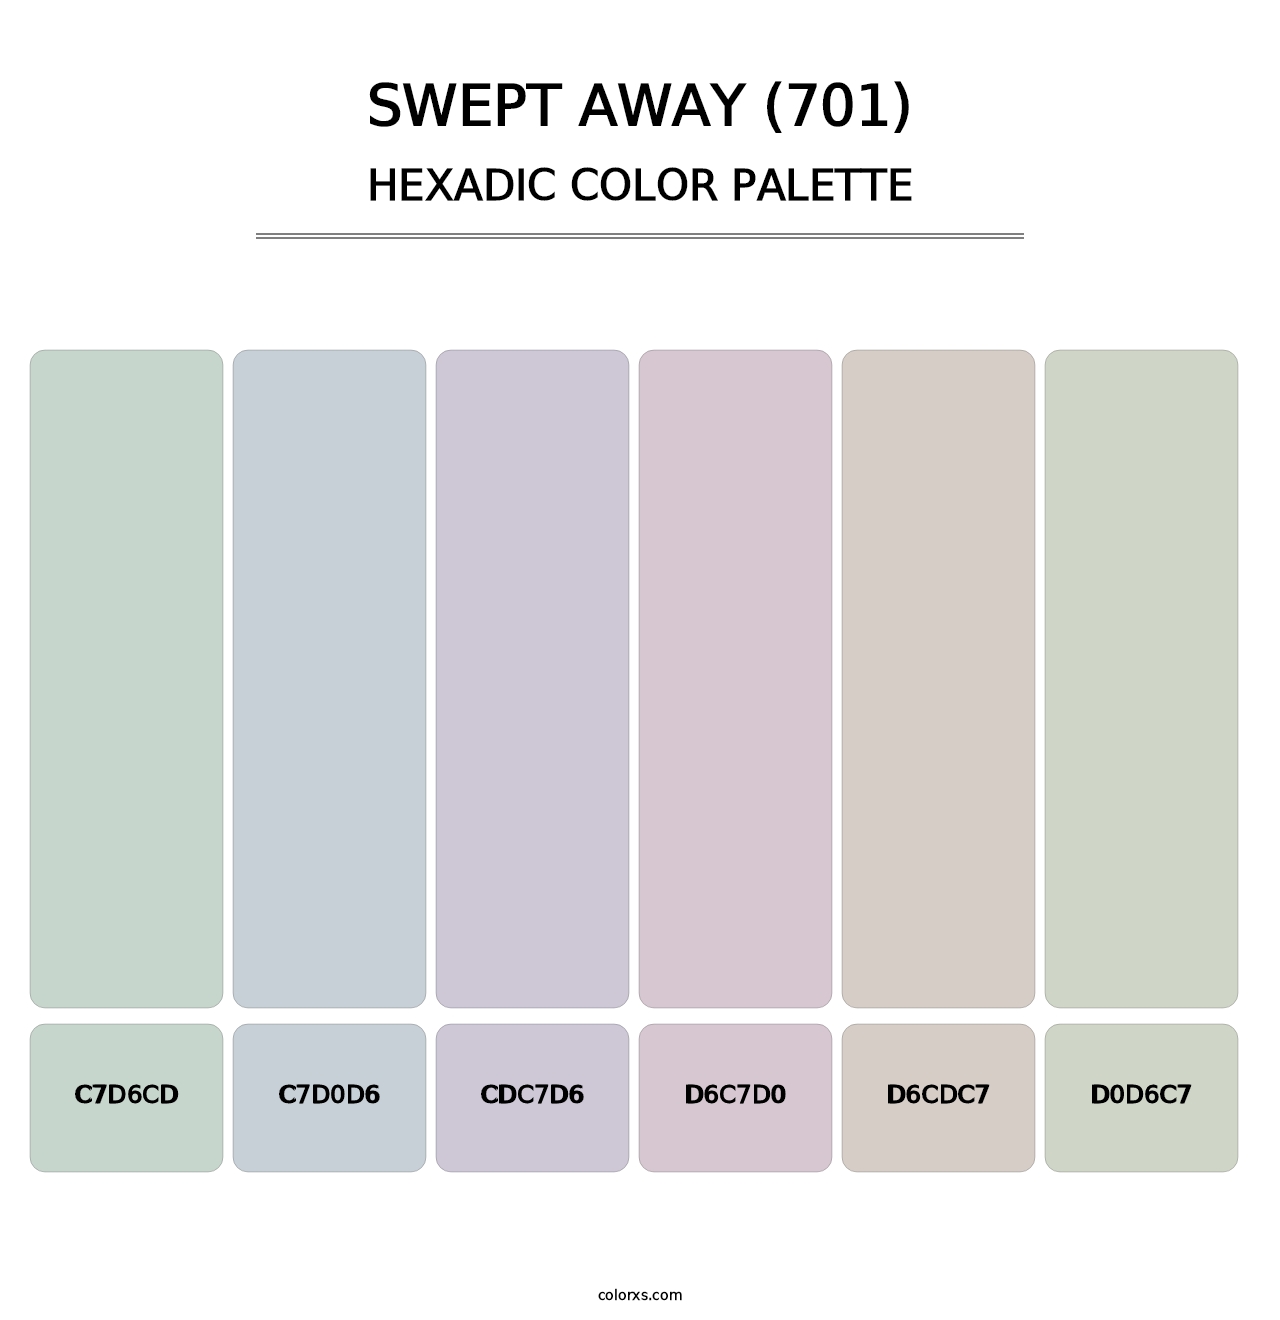 Swept Away (701) - Hexadic Color Palette